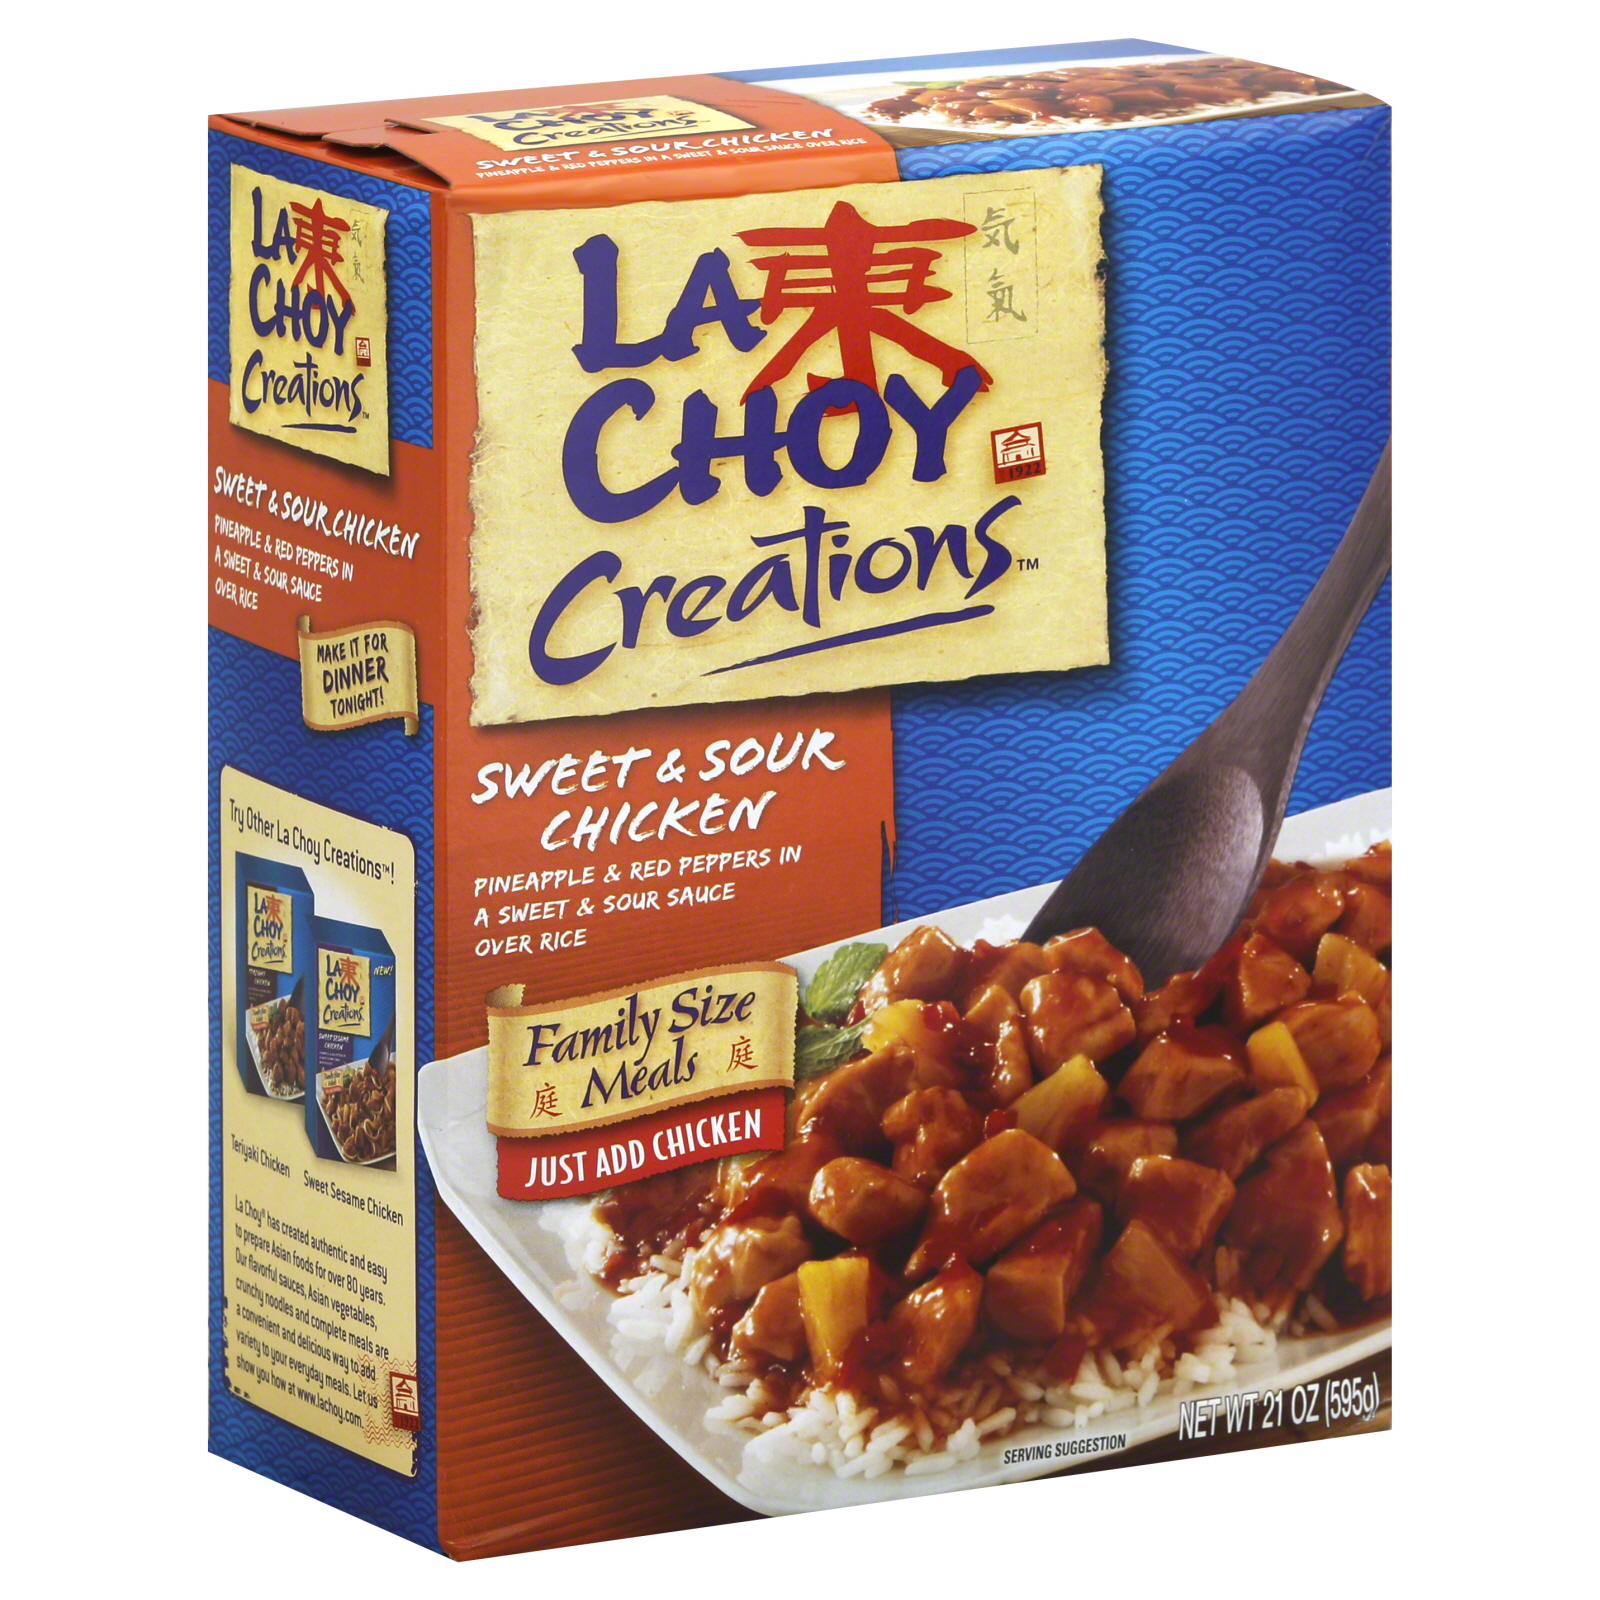 La Choy Creations Sweet & Sour Chicken 21 oz (595 g)